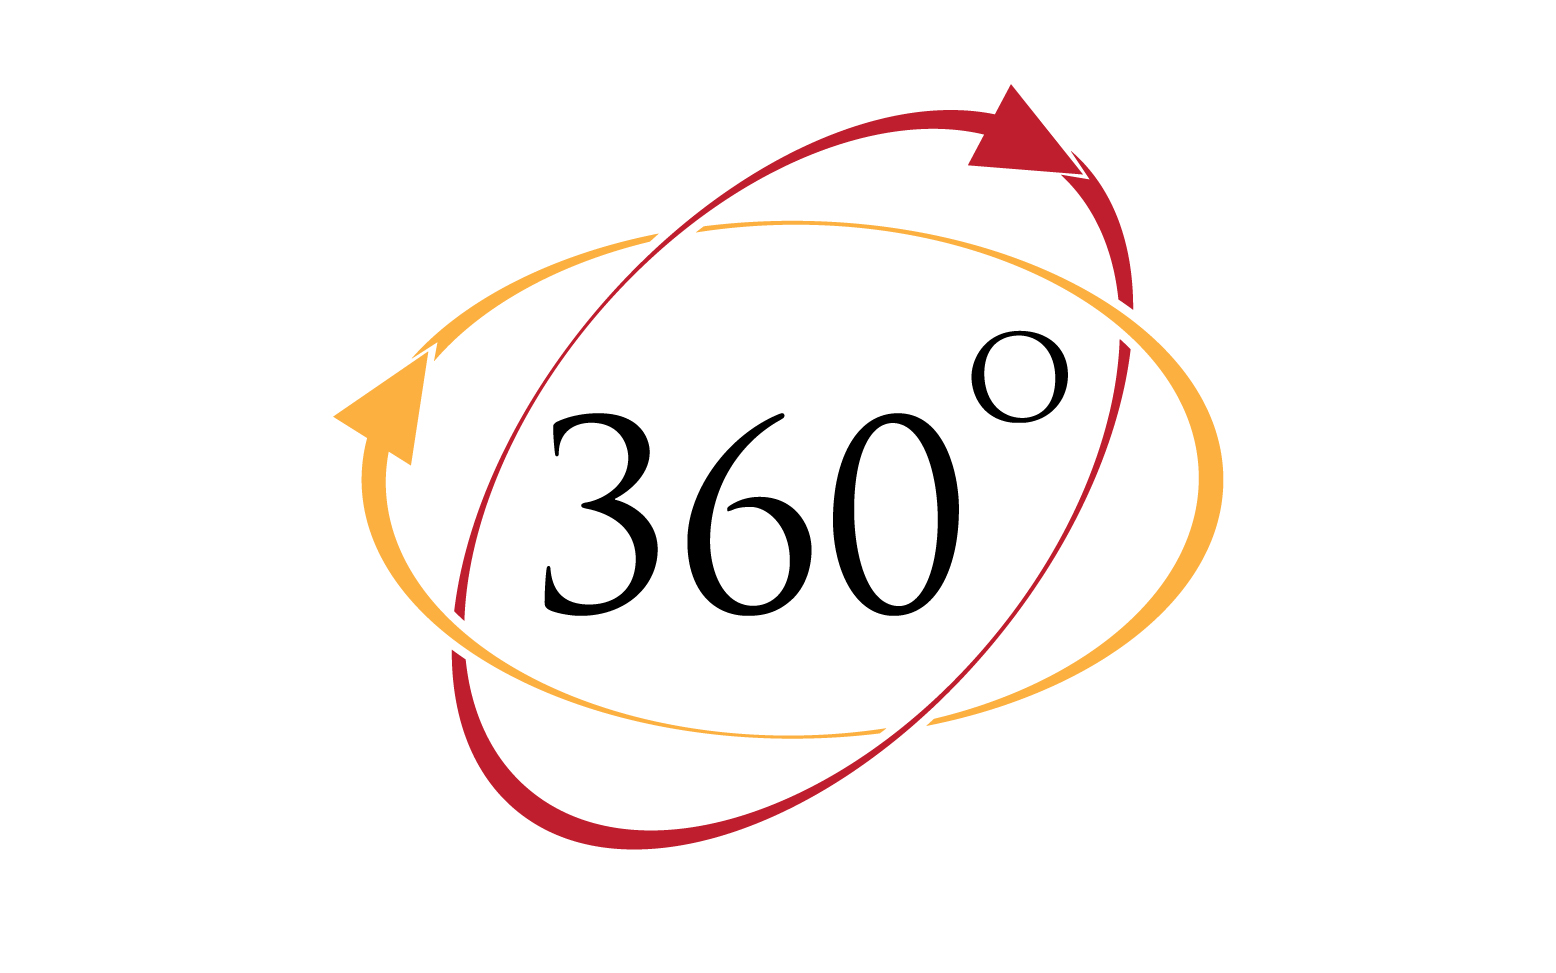 360 degree angle rotation icon symbol logo version v17